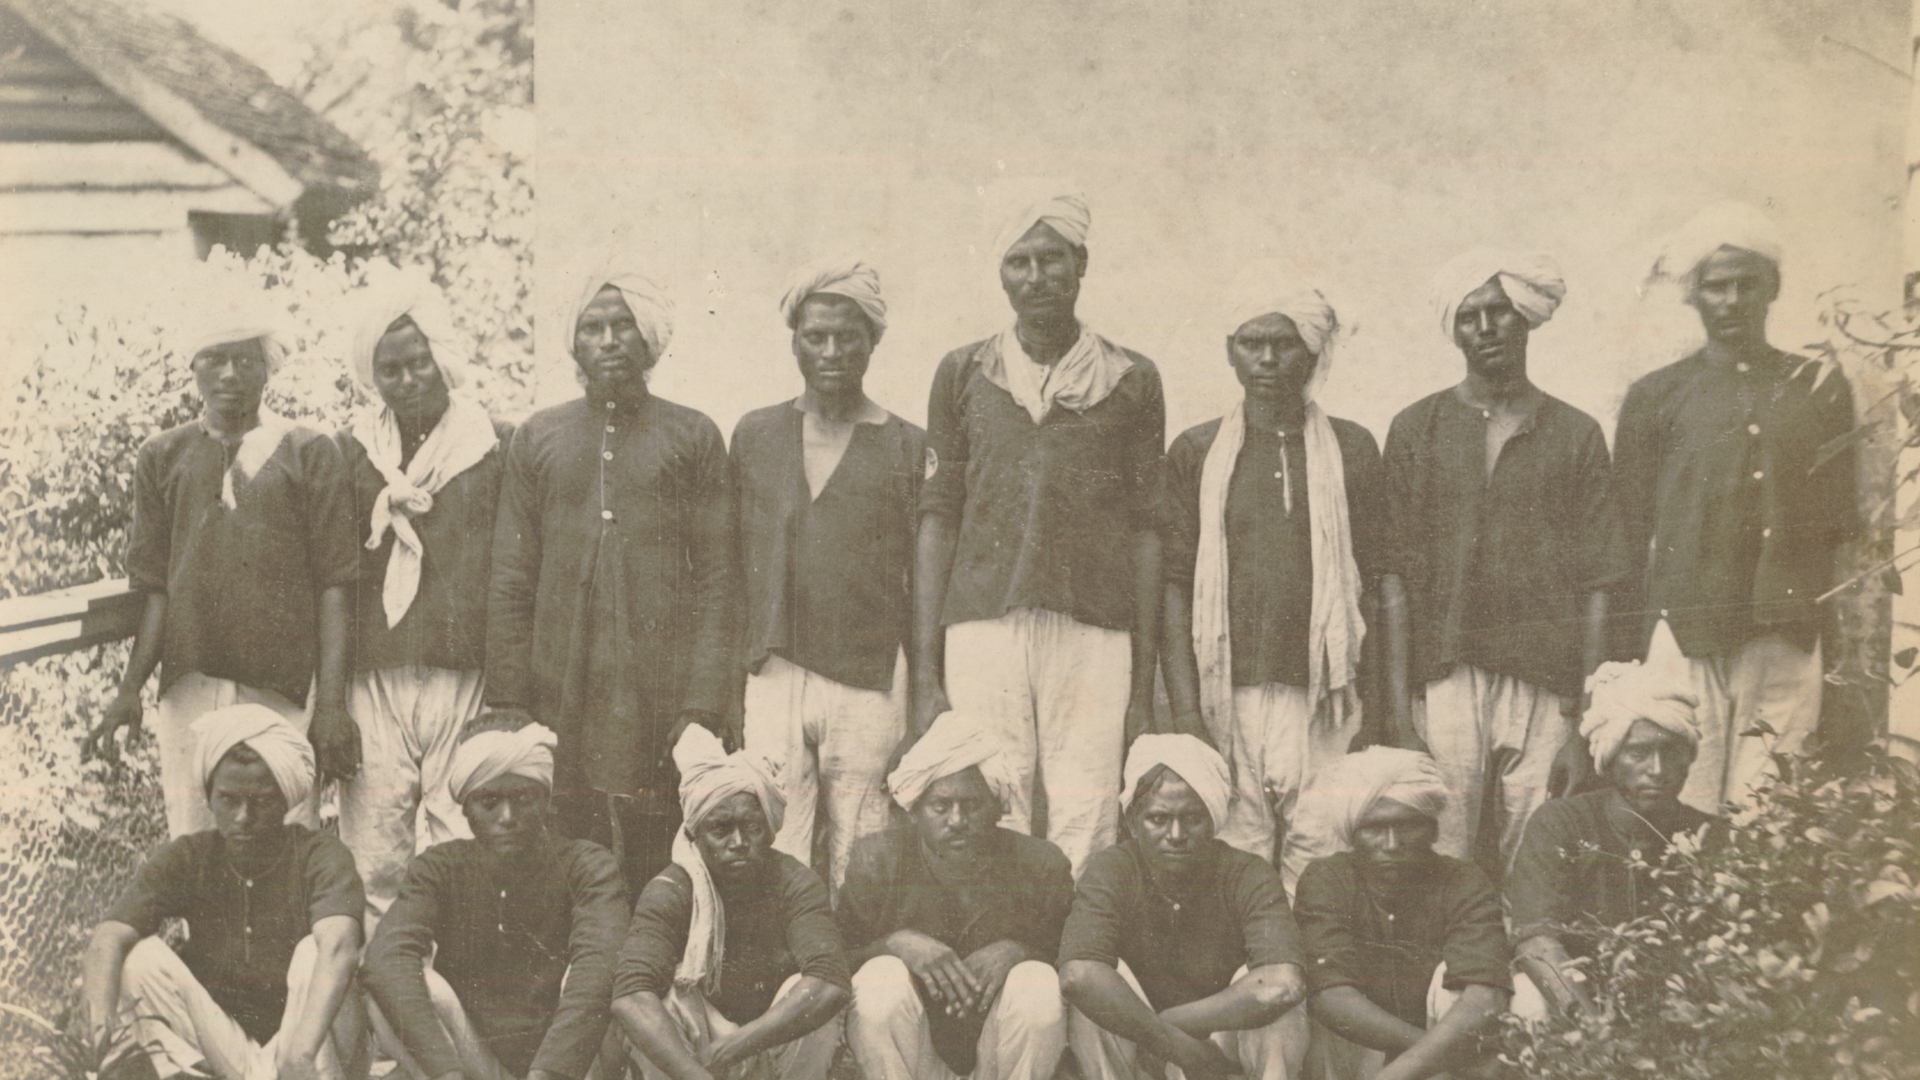 KITLV_-_152050_-_British-Indian_men,_probably_in_Surinam_-_circa_1900